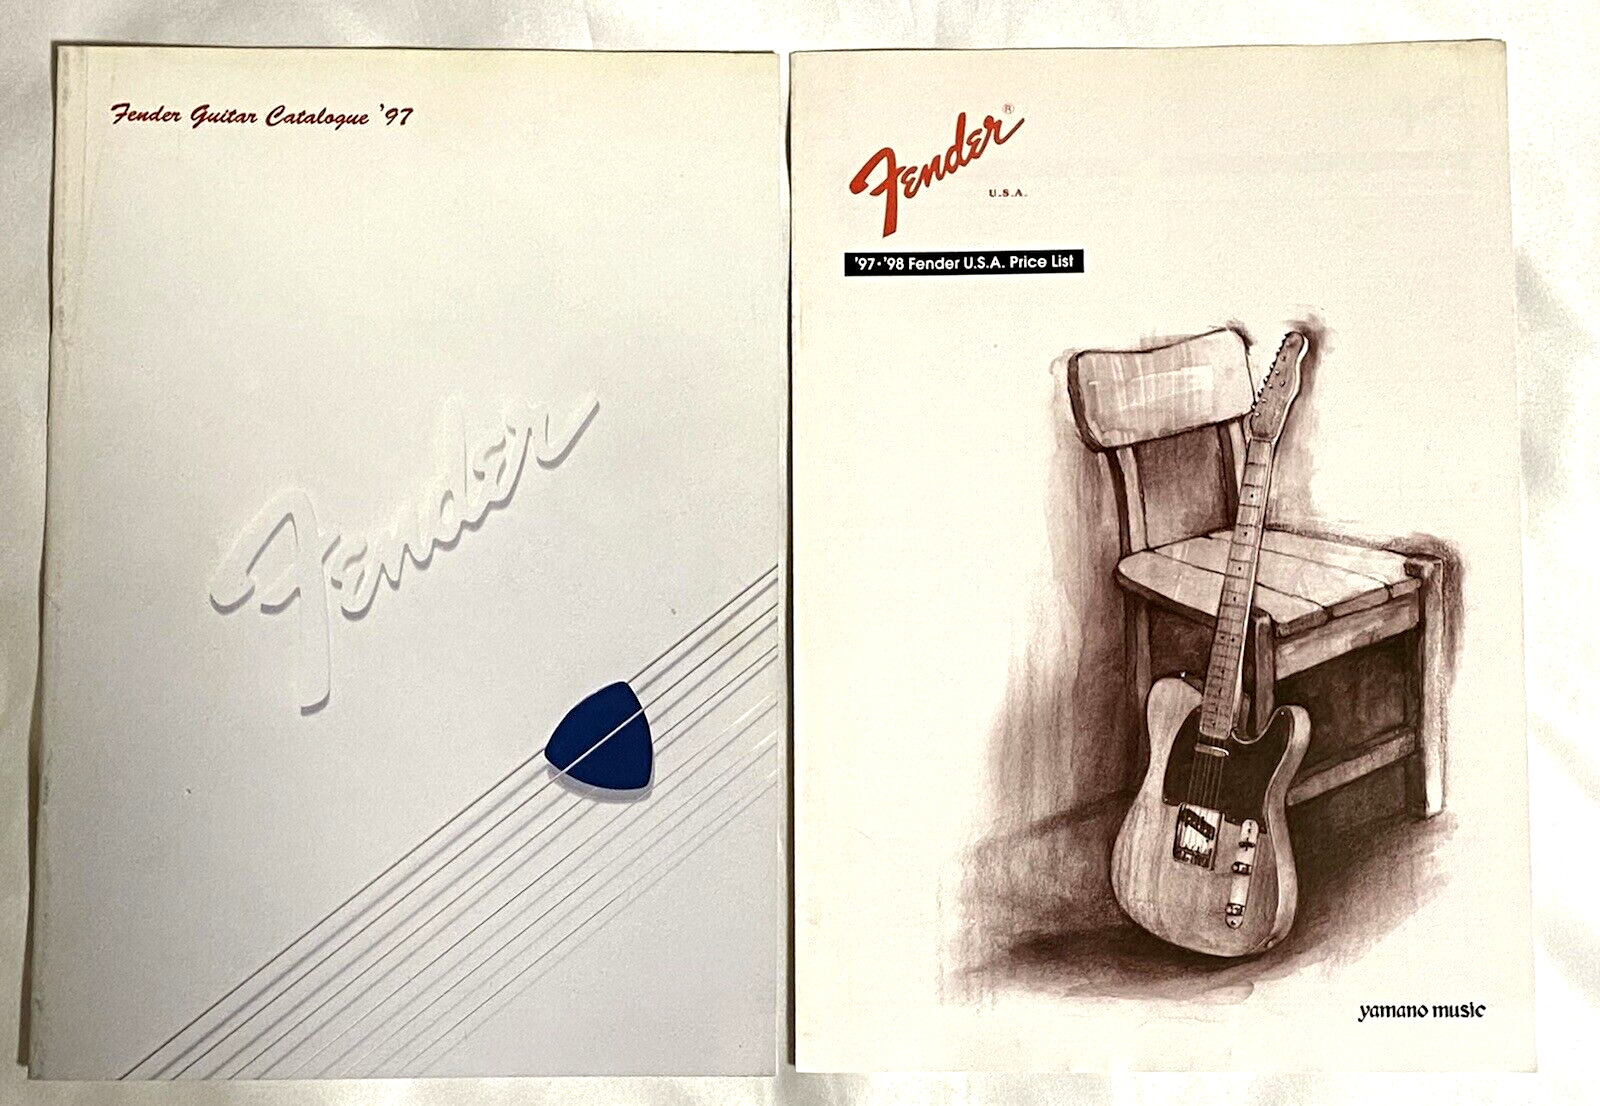 1997 Fender guitar Catalog and 97 98 Fender USA Price List